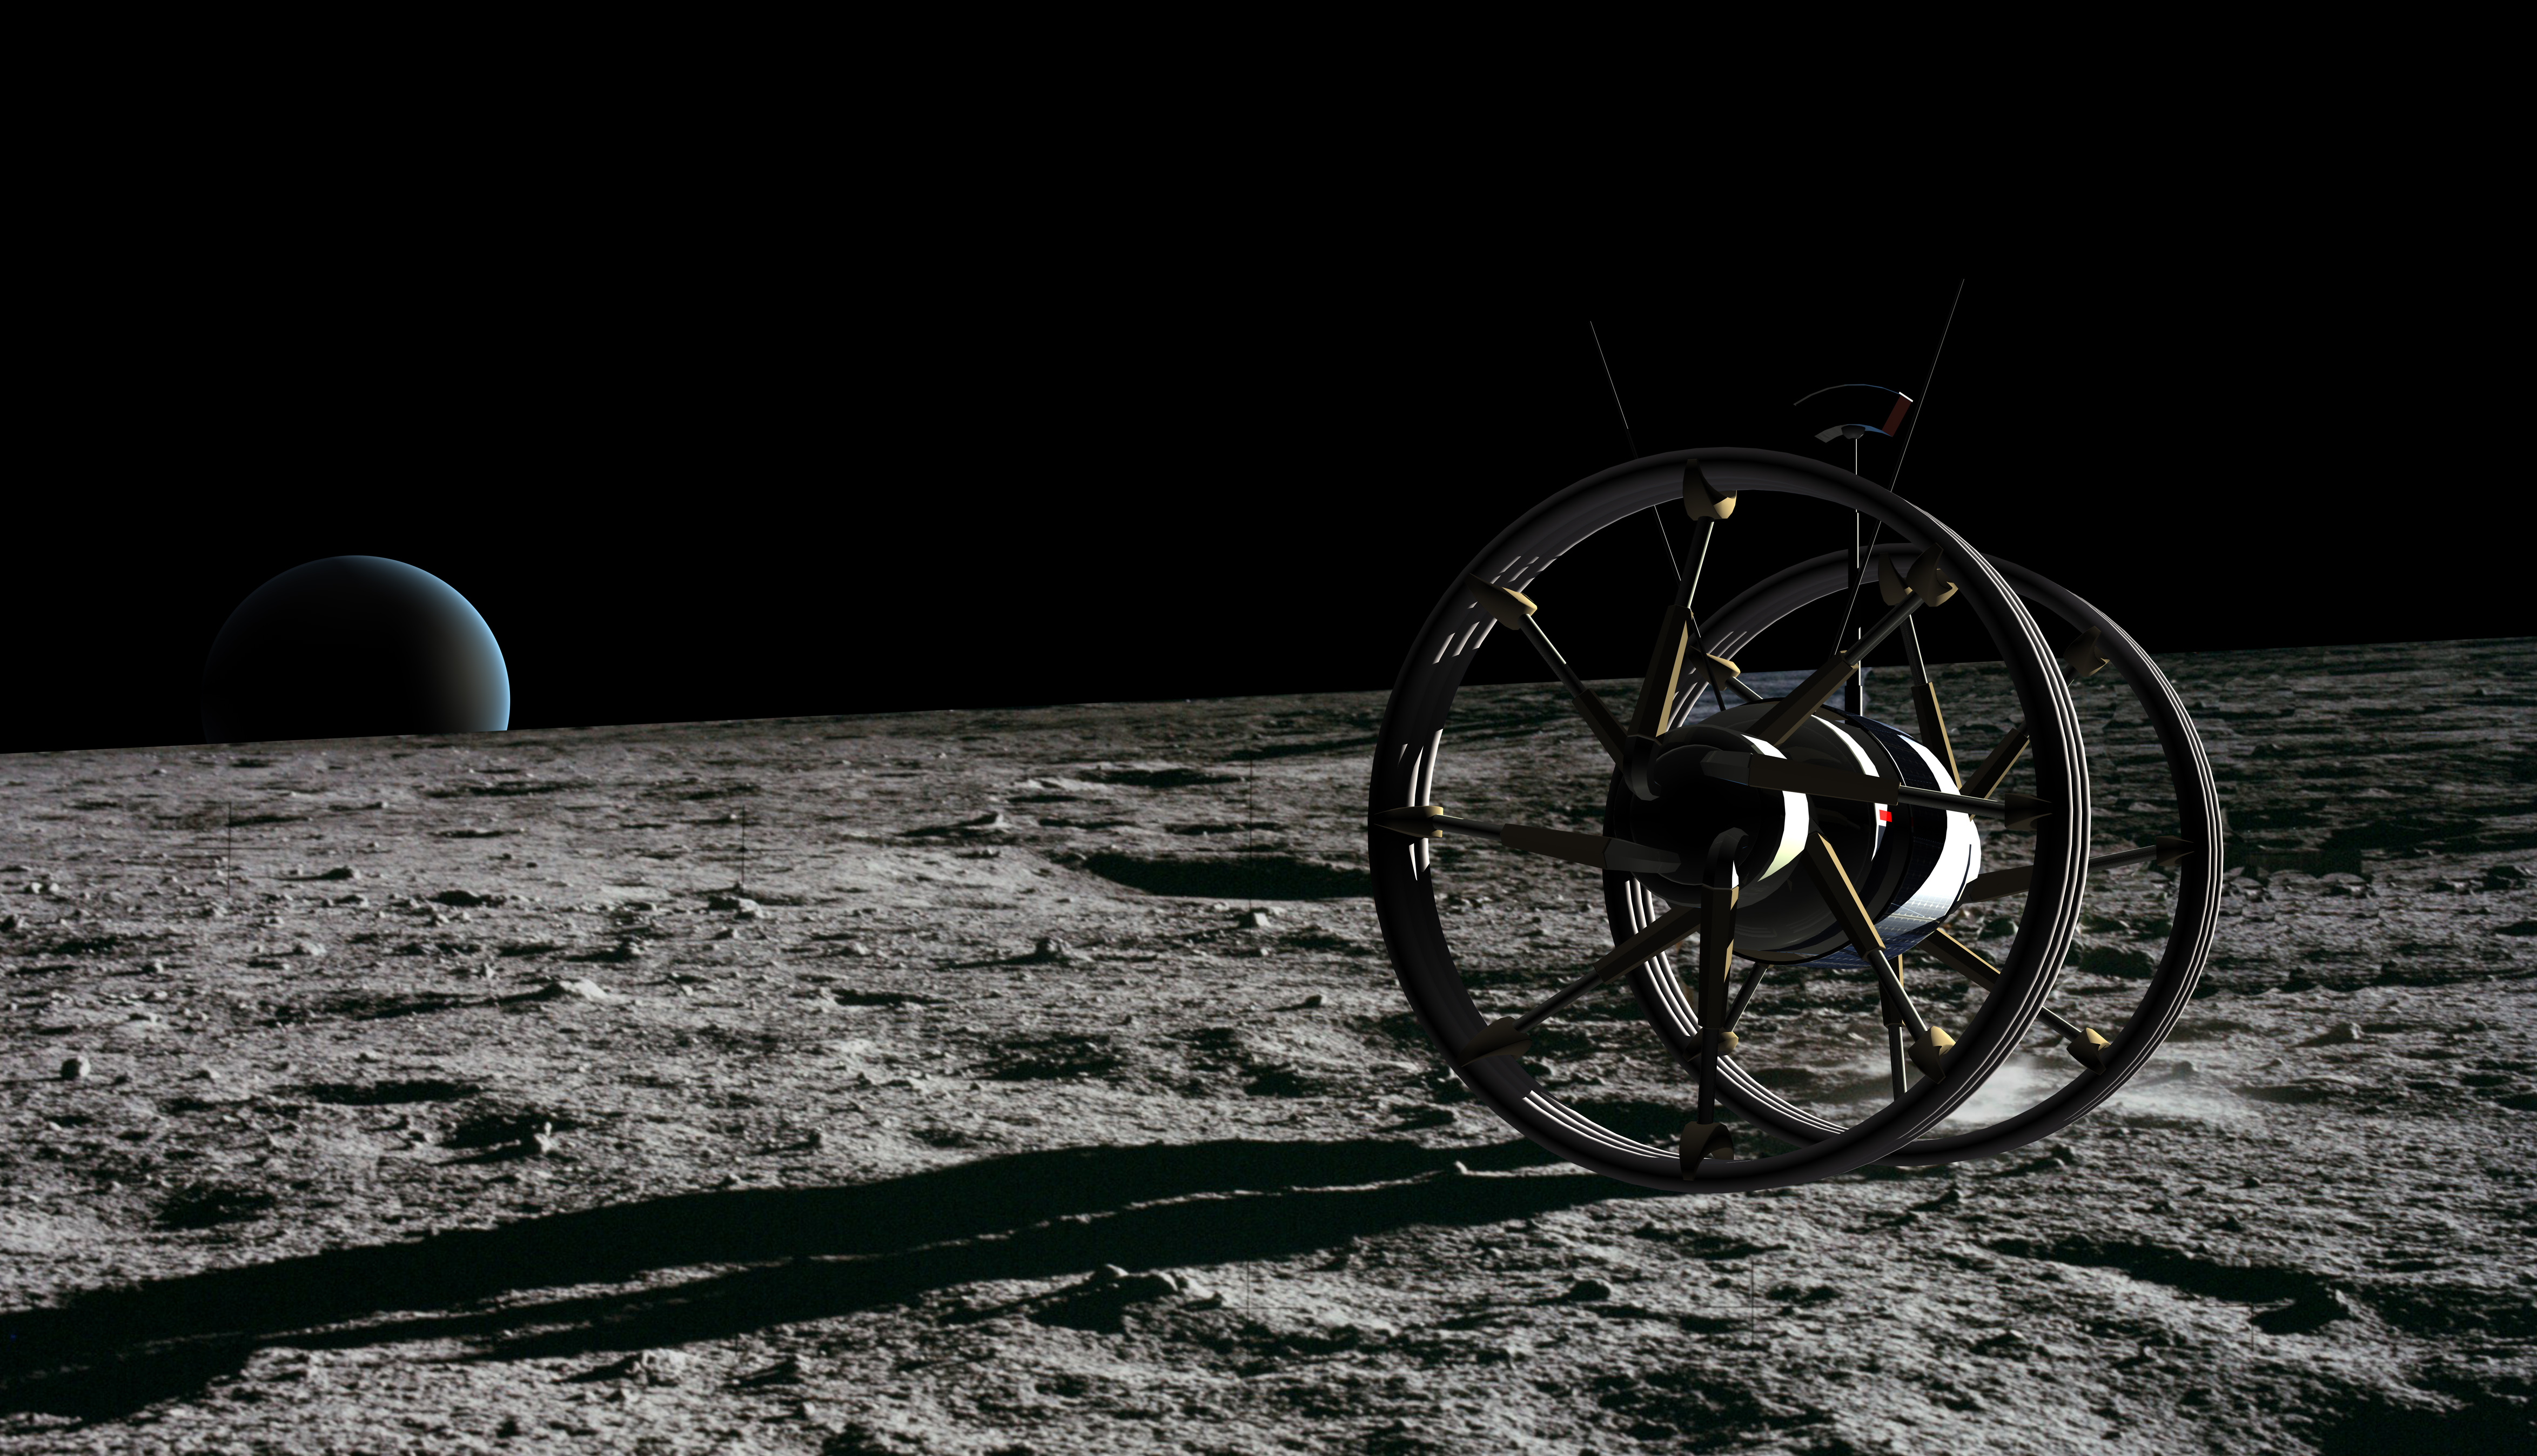 c-rove Mond Moon Rover GLXP Google Lunar Xprice c-base Open moon Openmoon Christian Bennat Projekt Konzept Design Marten Suhr